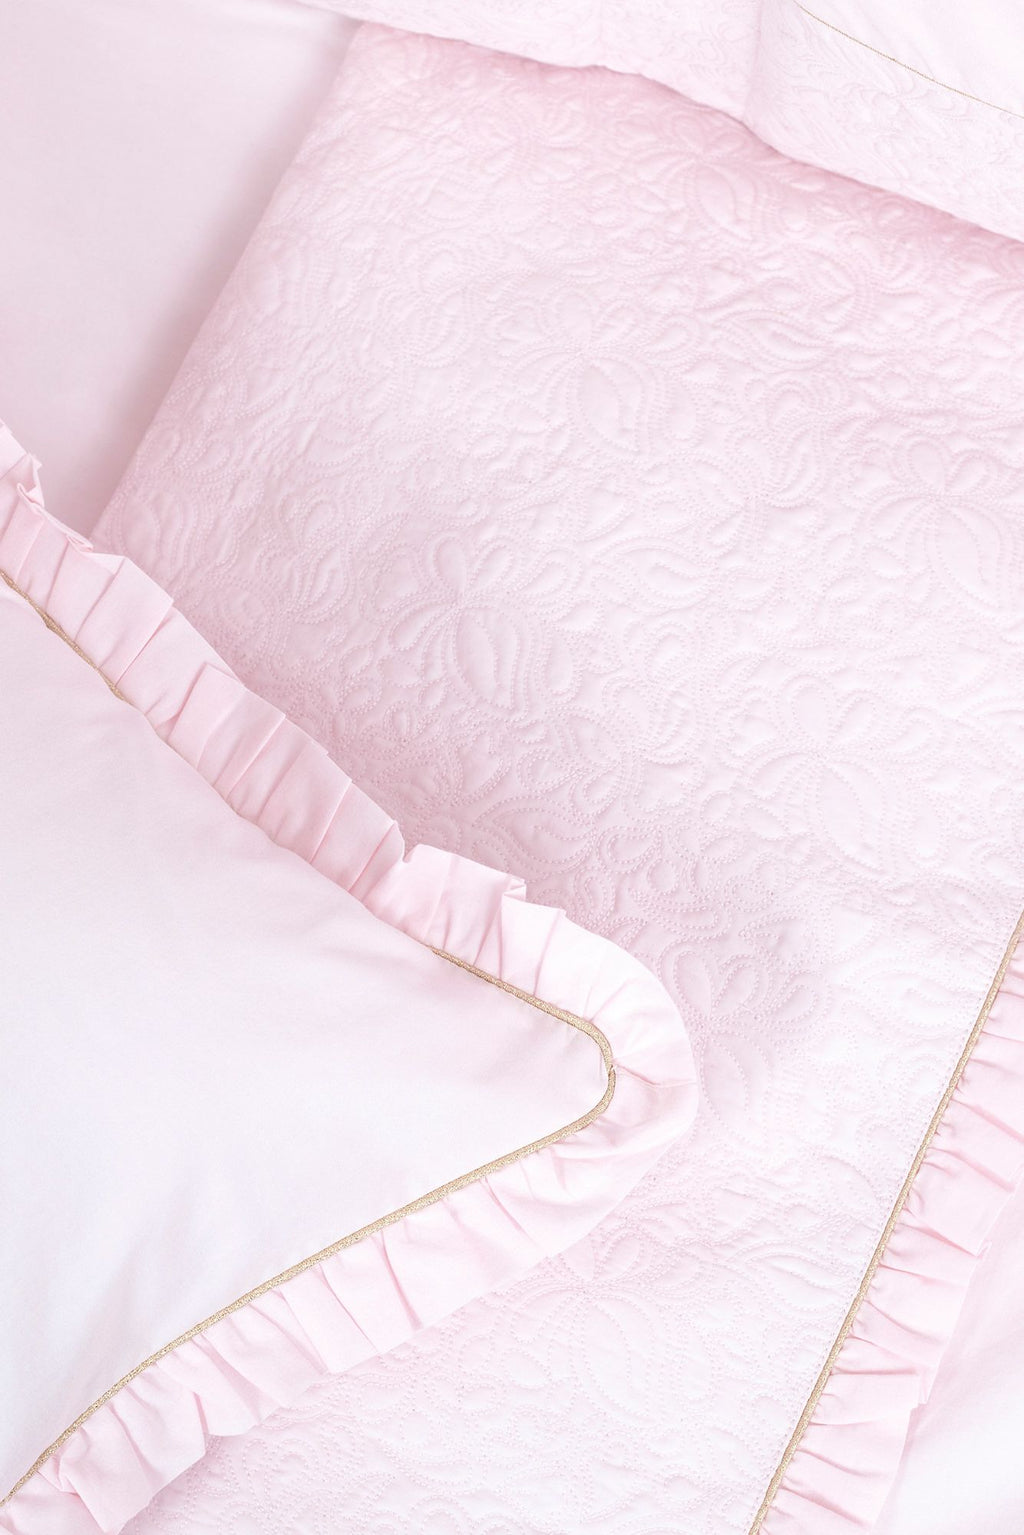 Bed linen set - Delicacy Pale pink